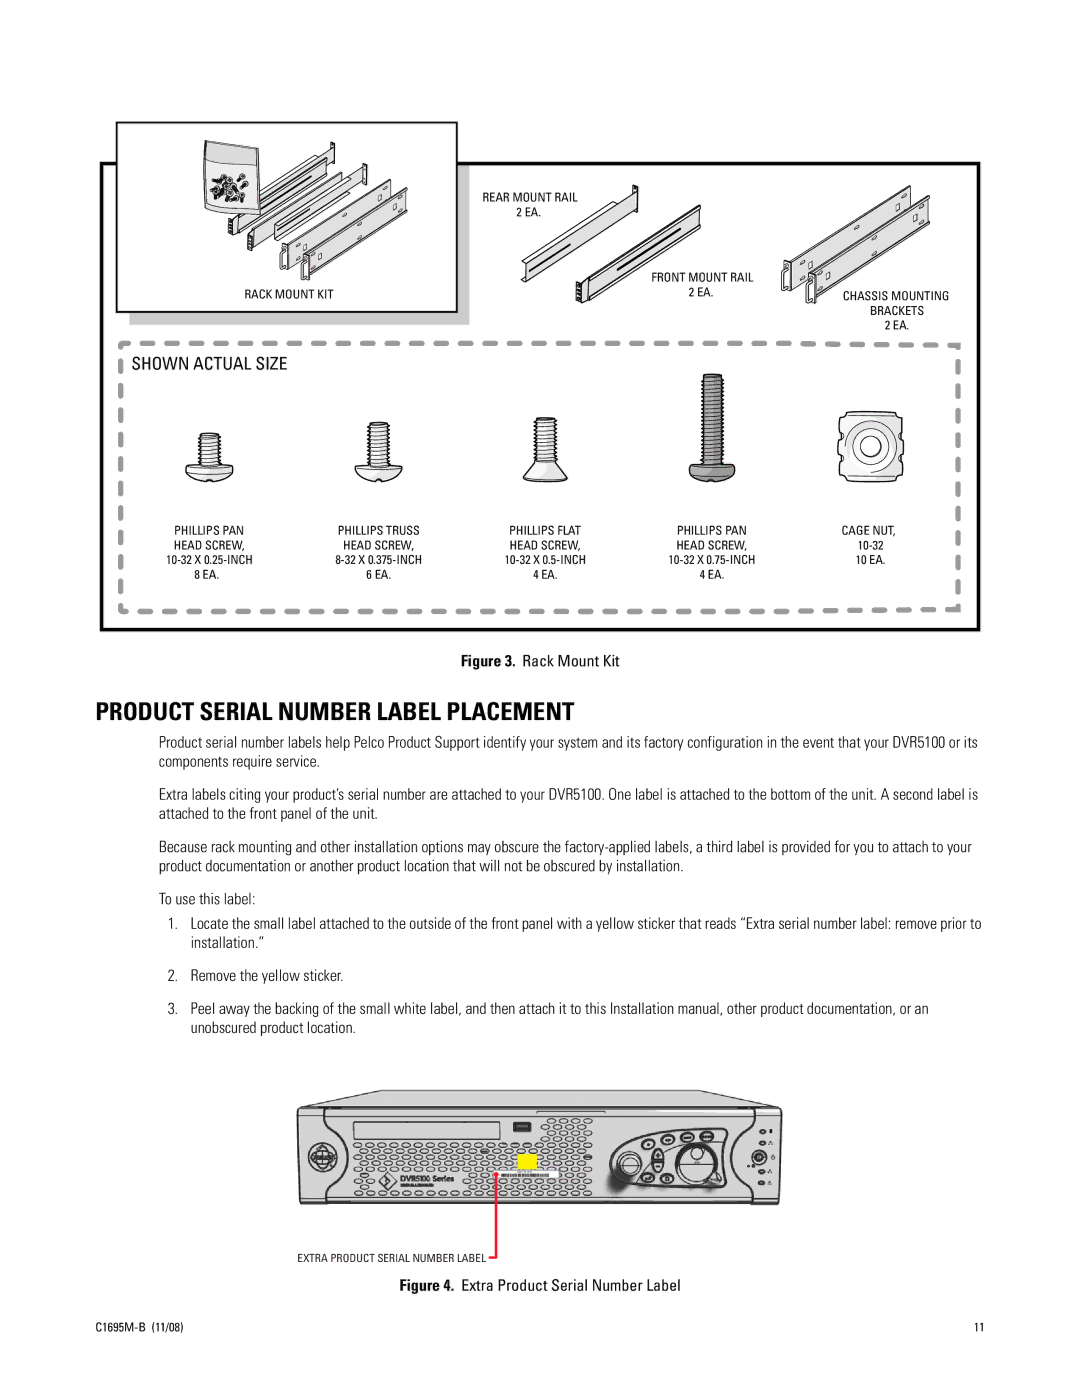 Pelco DVR5100 manual Product Serial Number Label Placement, Extra Product Serial Number Label 